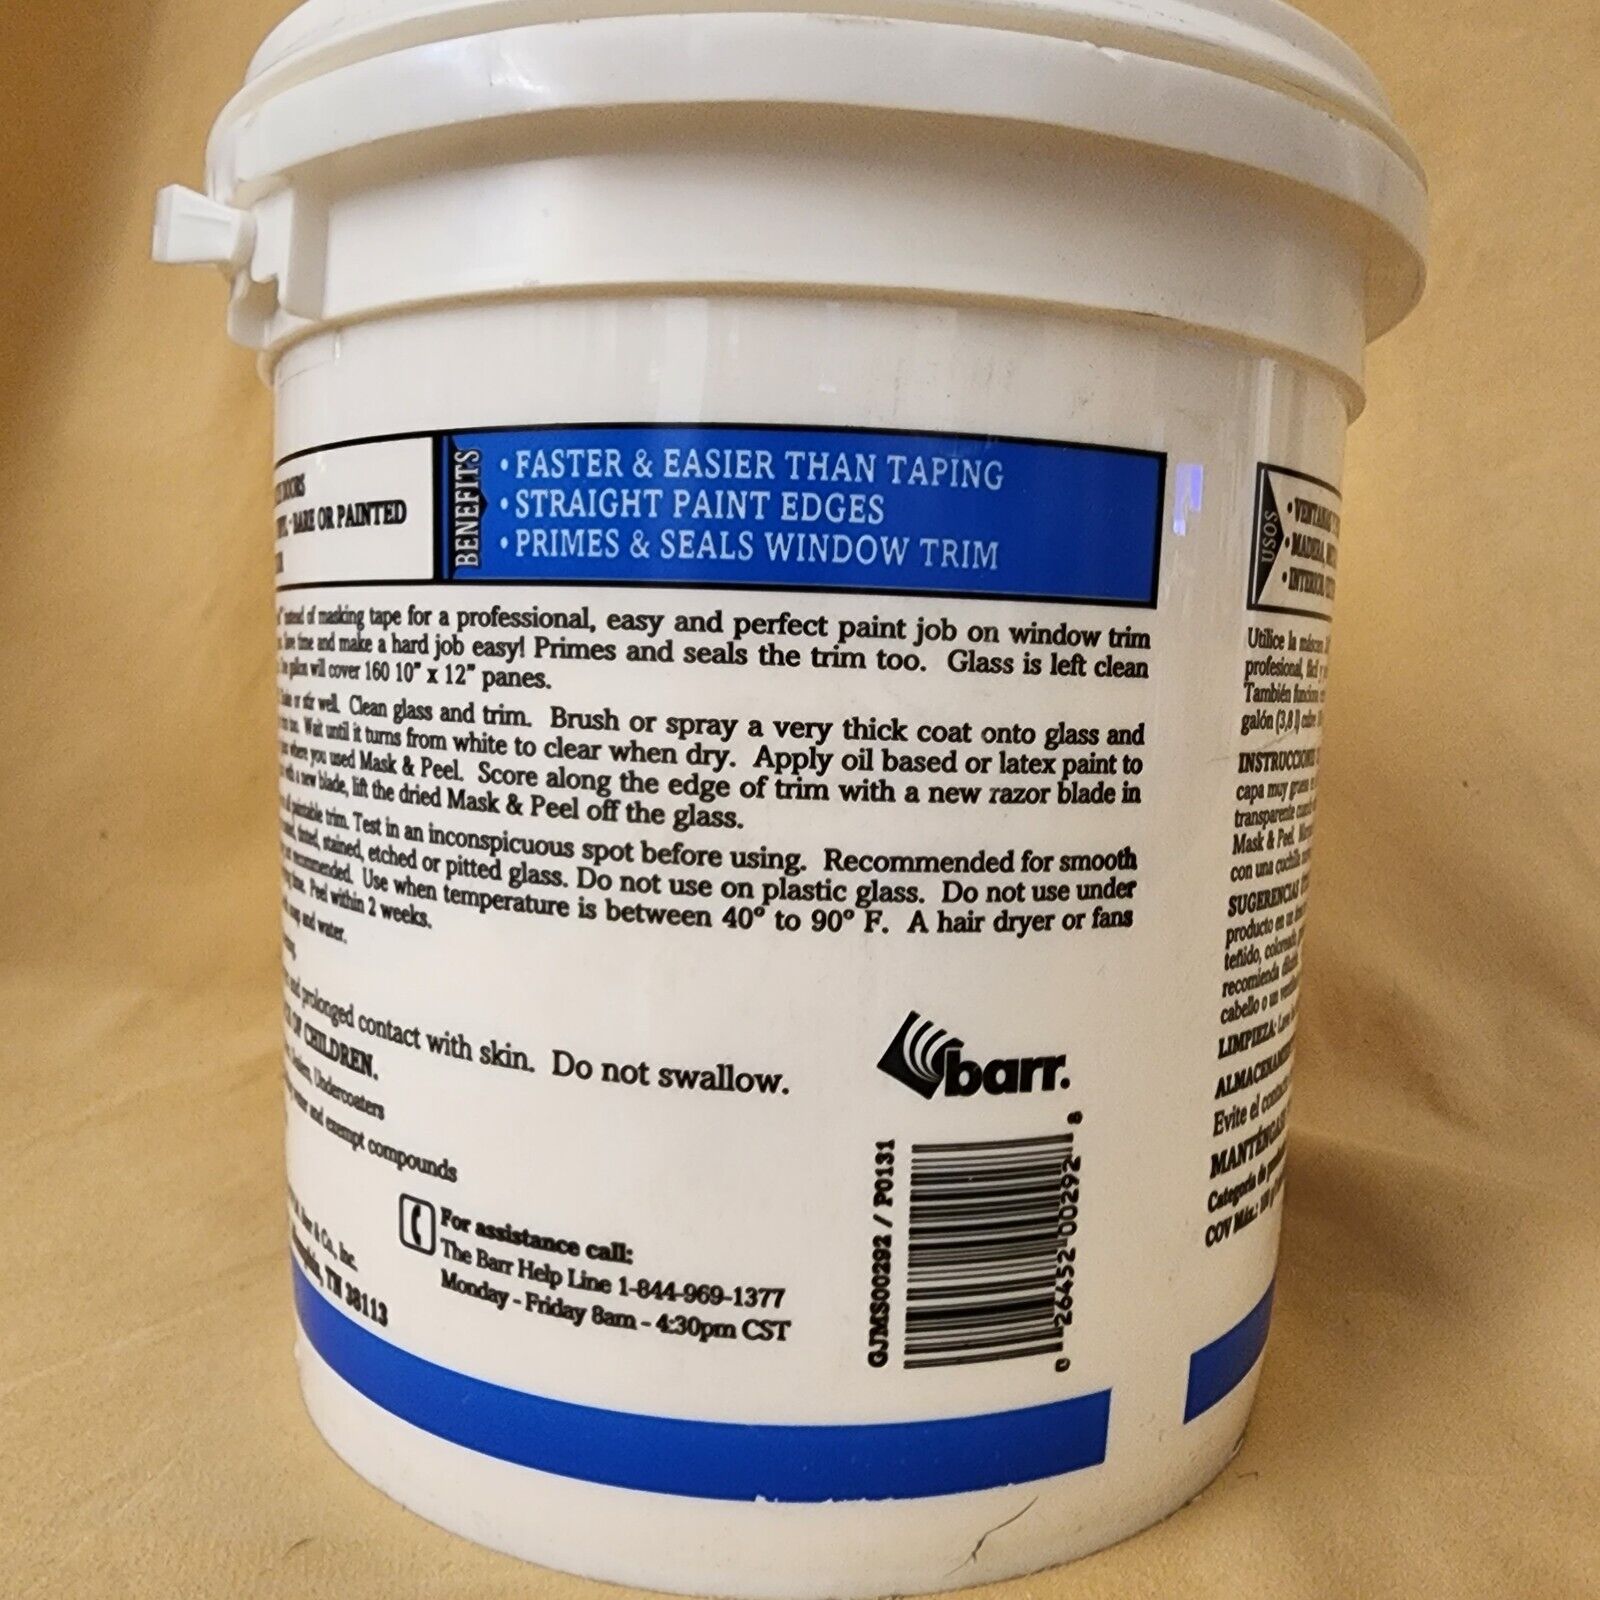 Jasco GJMS00292 Liquid Mask and Seal, 1-Gallon - Chemical Bioreagents 